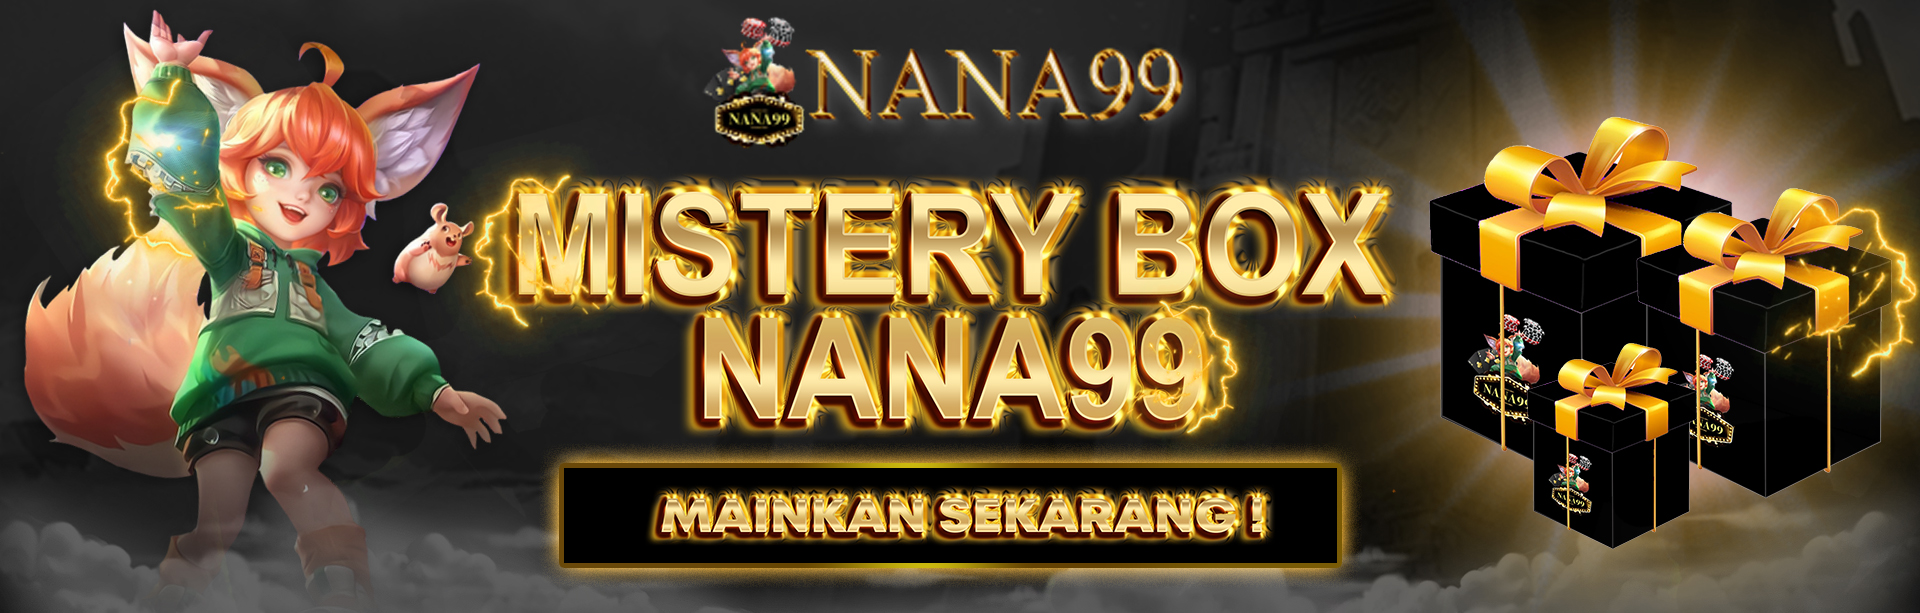 Misteri Box Nana